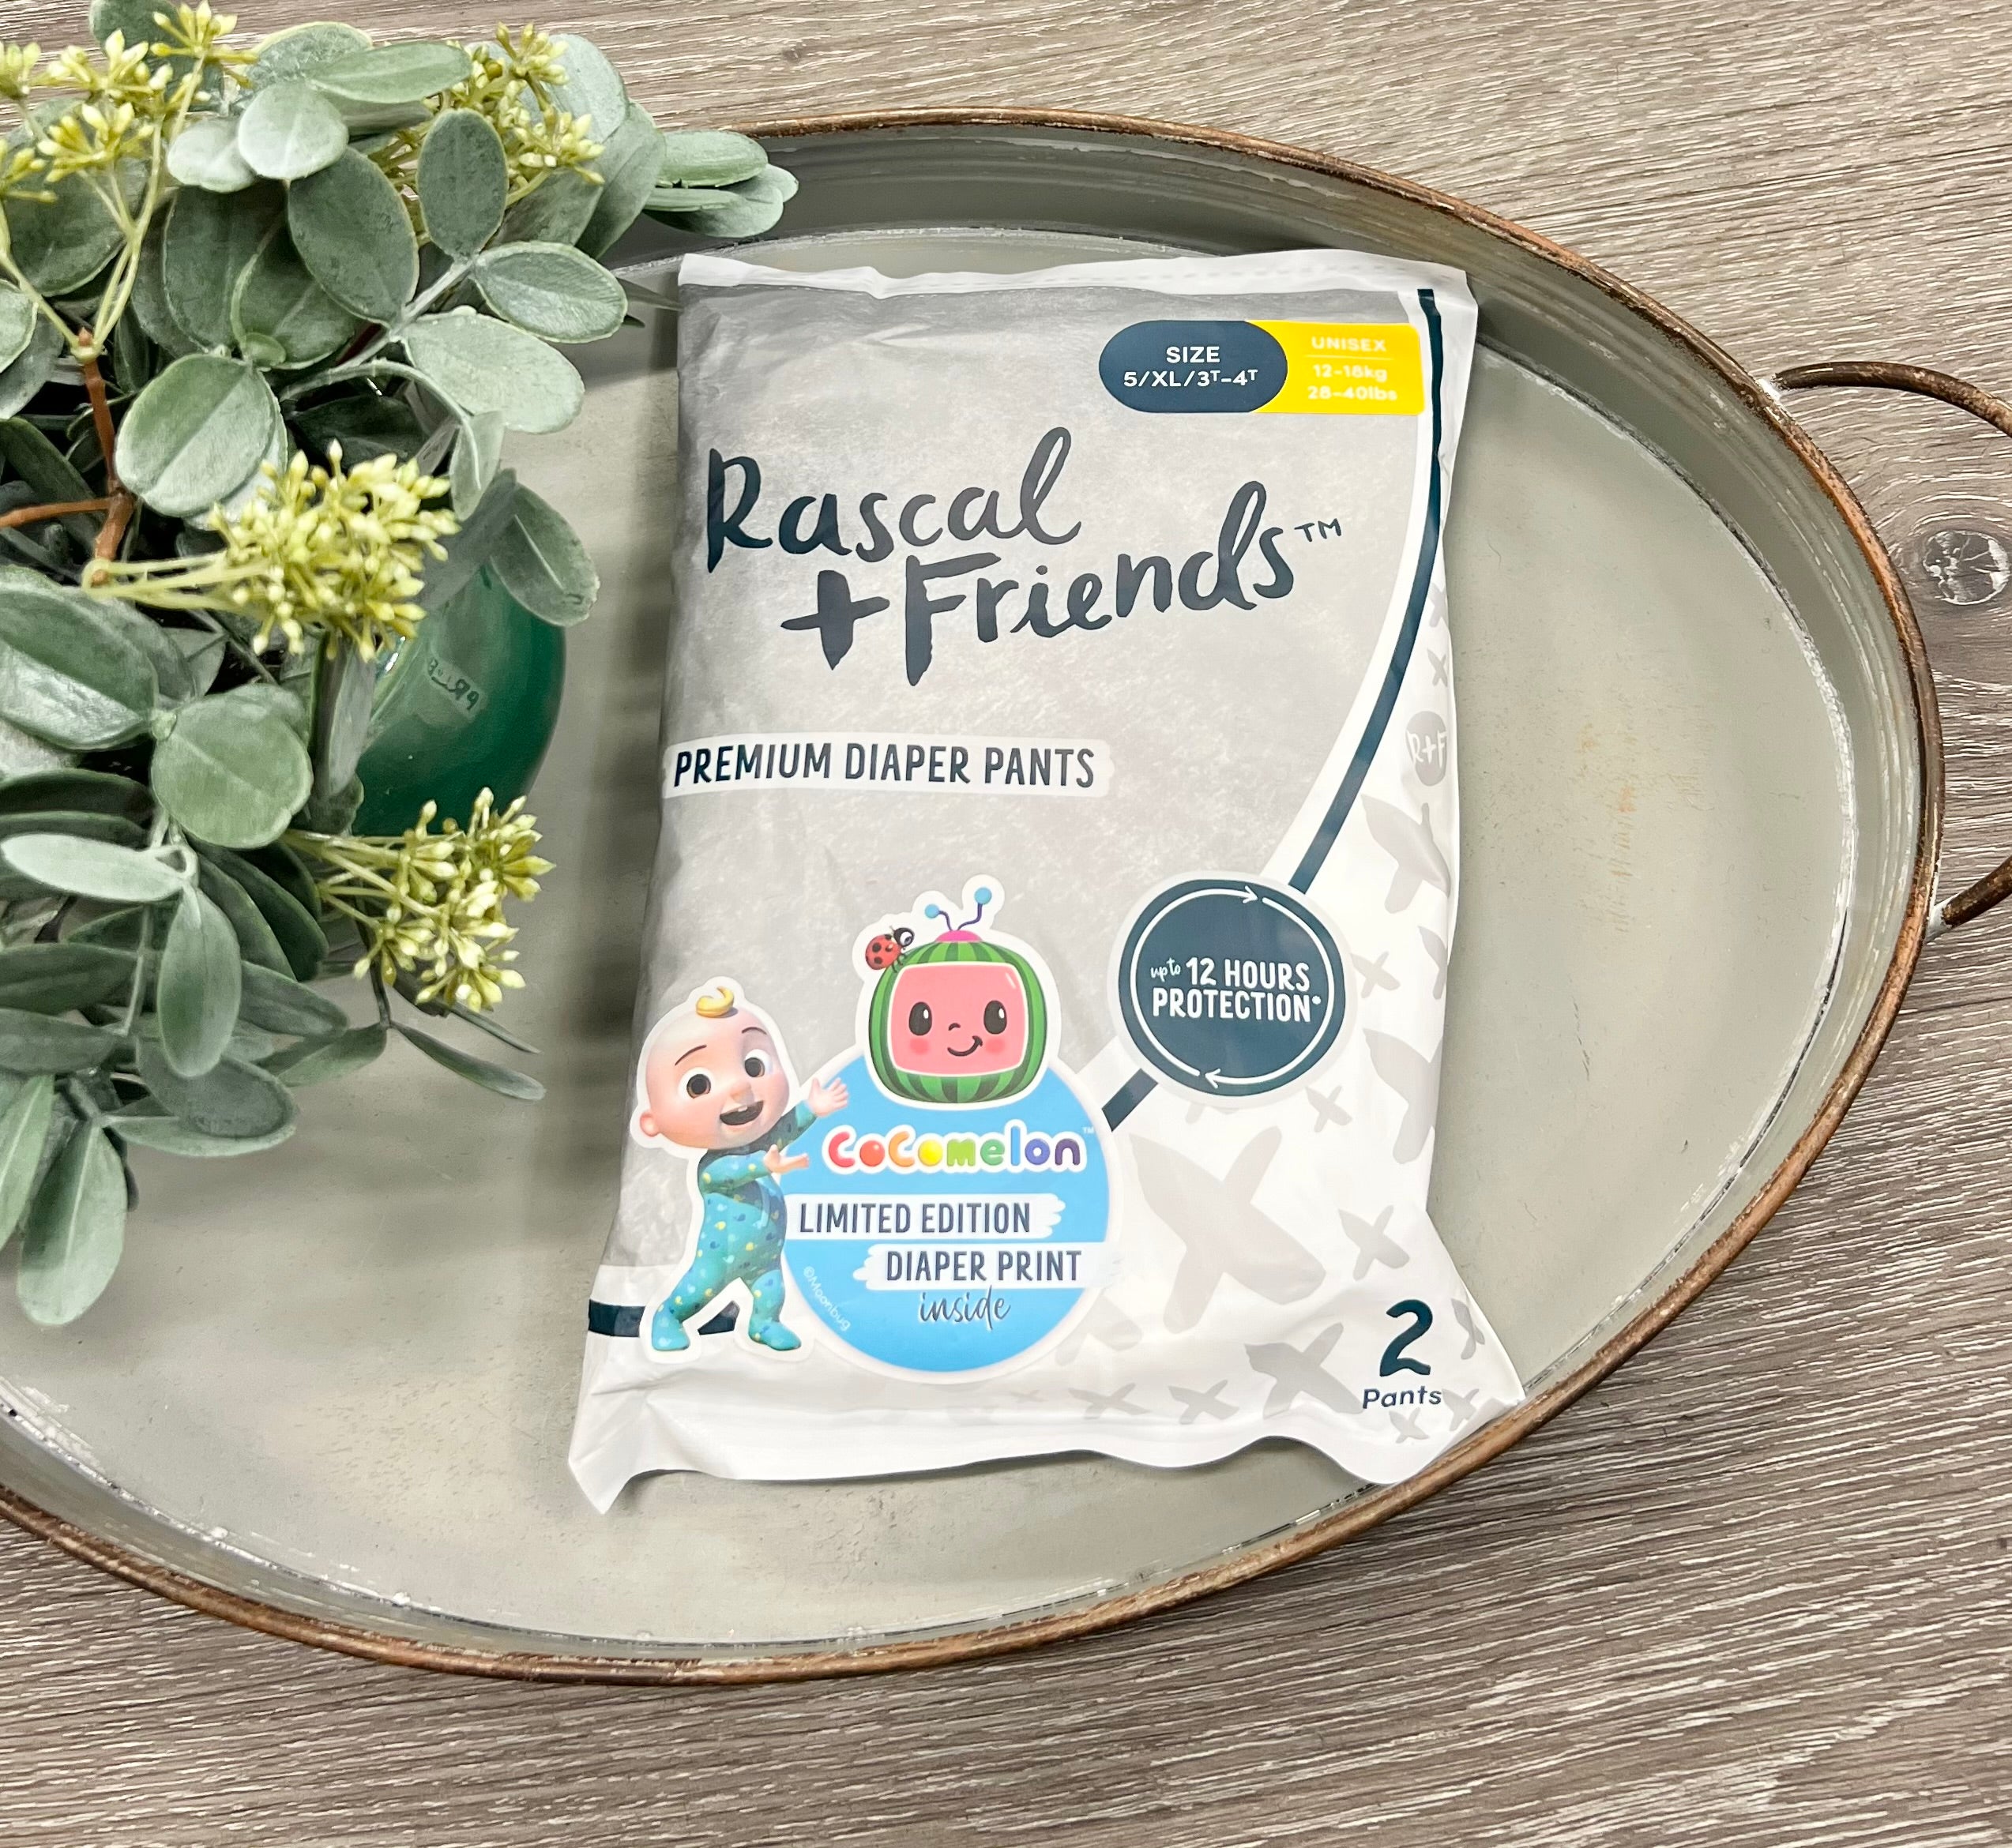 Rascal + Friends Premium Diaper Pants